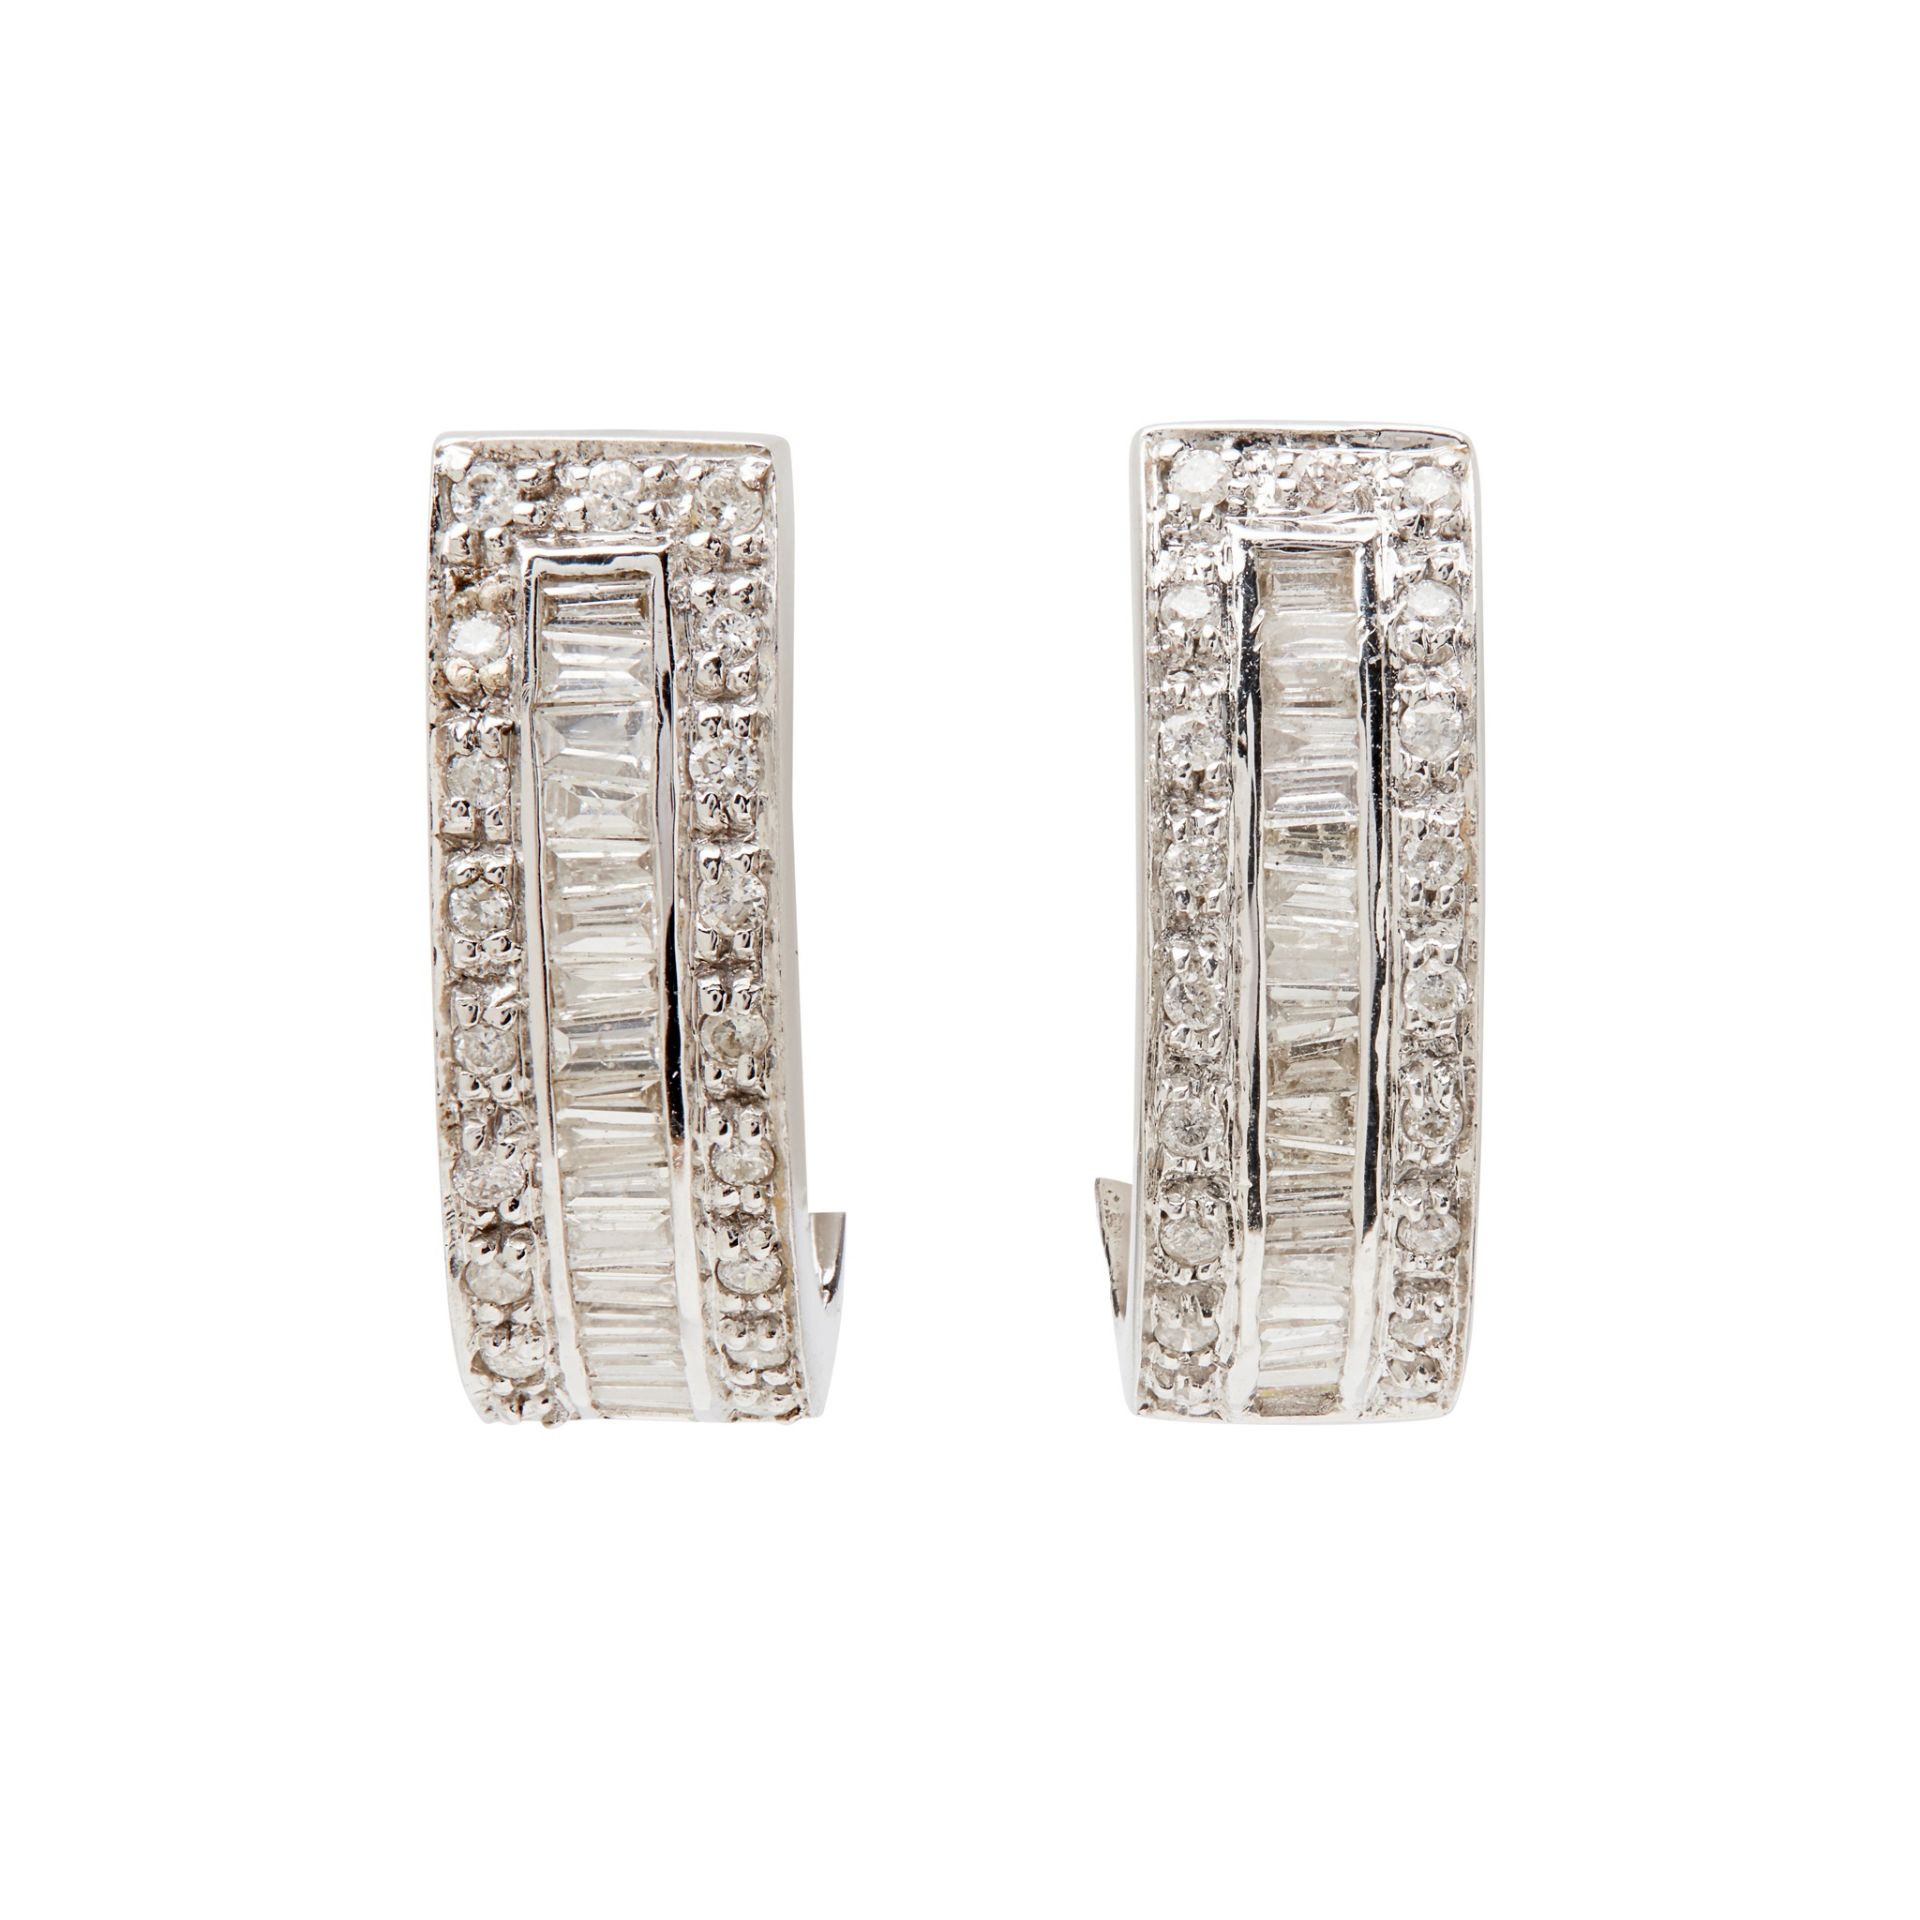 Two pairs of diamond set earrings - Image 2 of 3